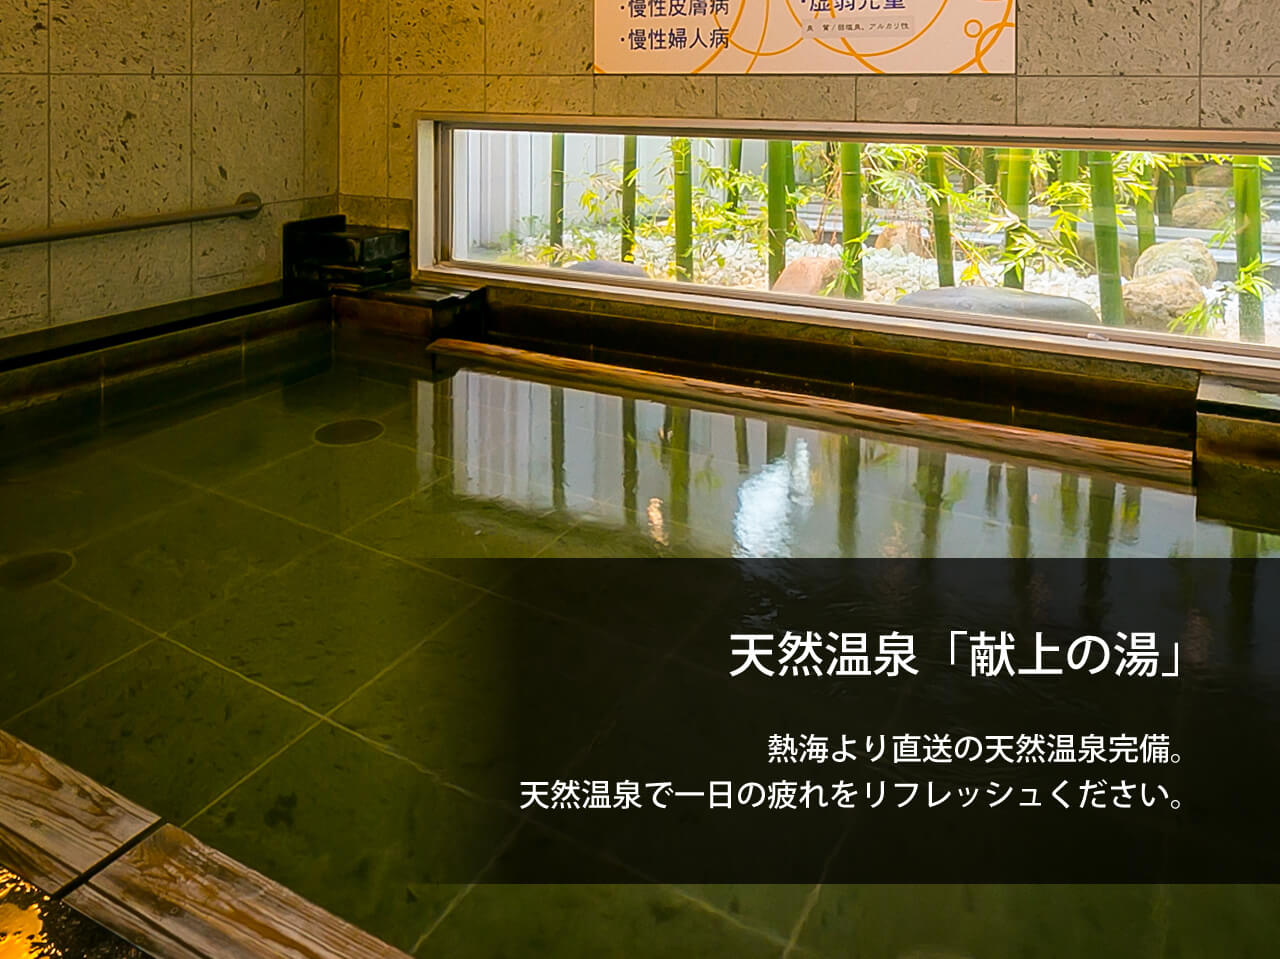 天然温泉 献上の湯 スーパーホテル天然温泉富士本館